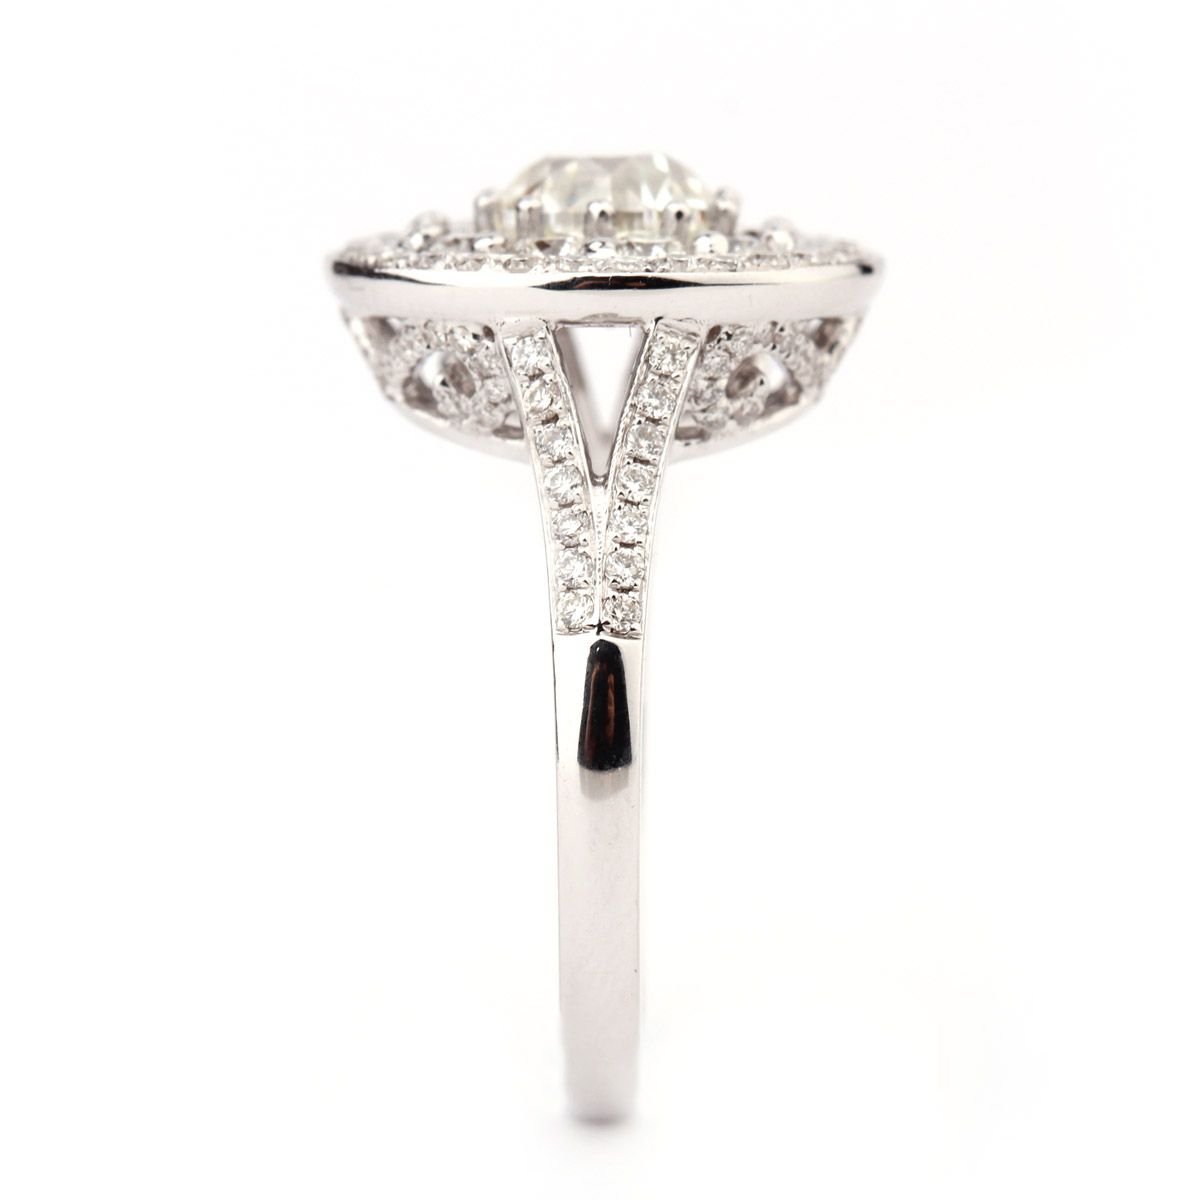  White Diamond Ring, 1.00 Ct. (1.84 Ct. TW), Round shape, EGL IL Certified, EGLOO10470189